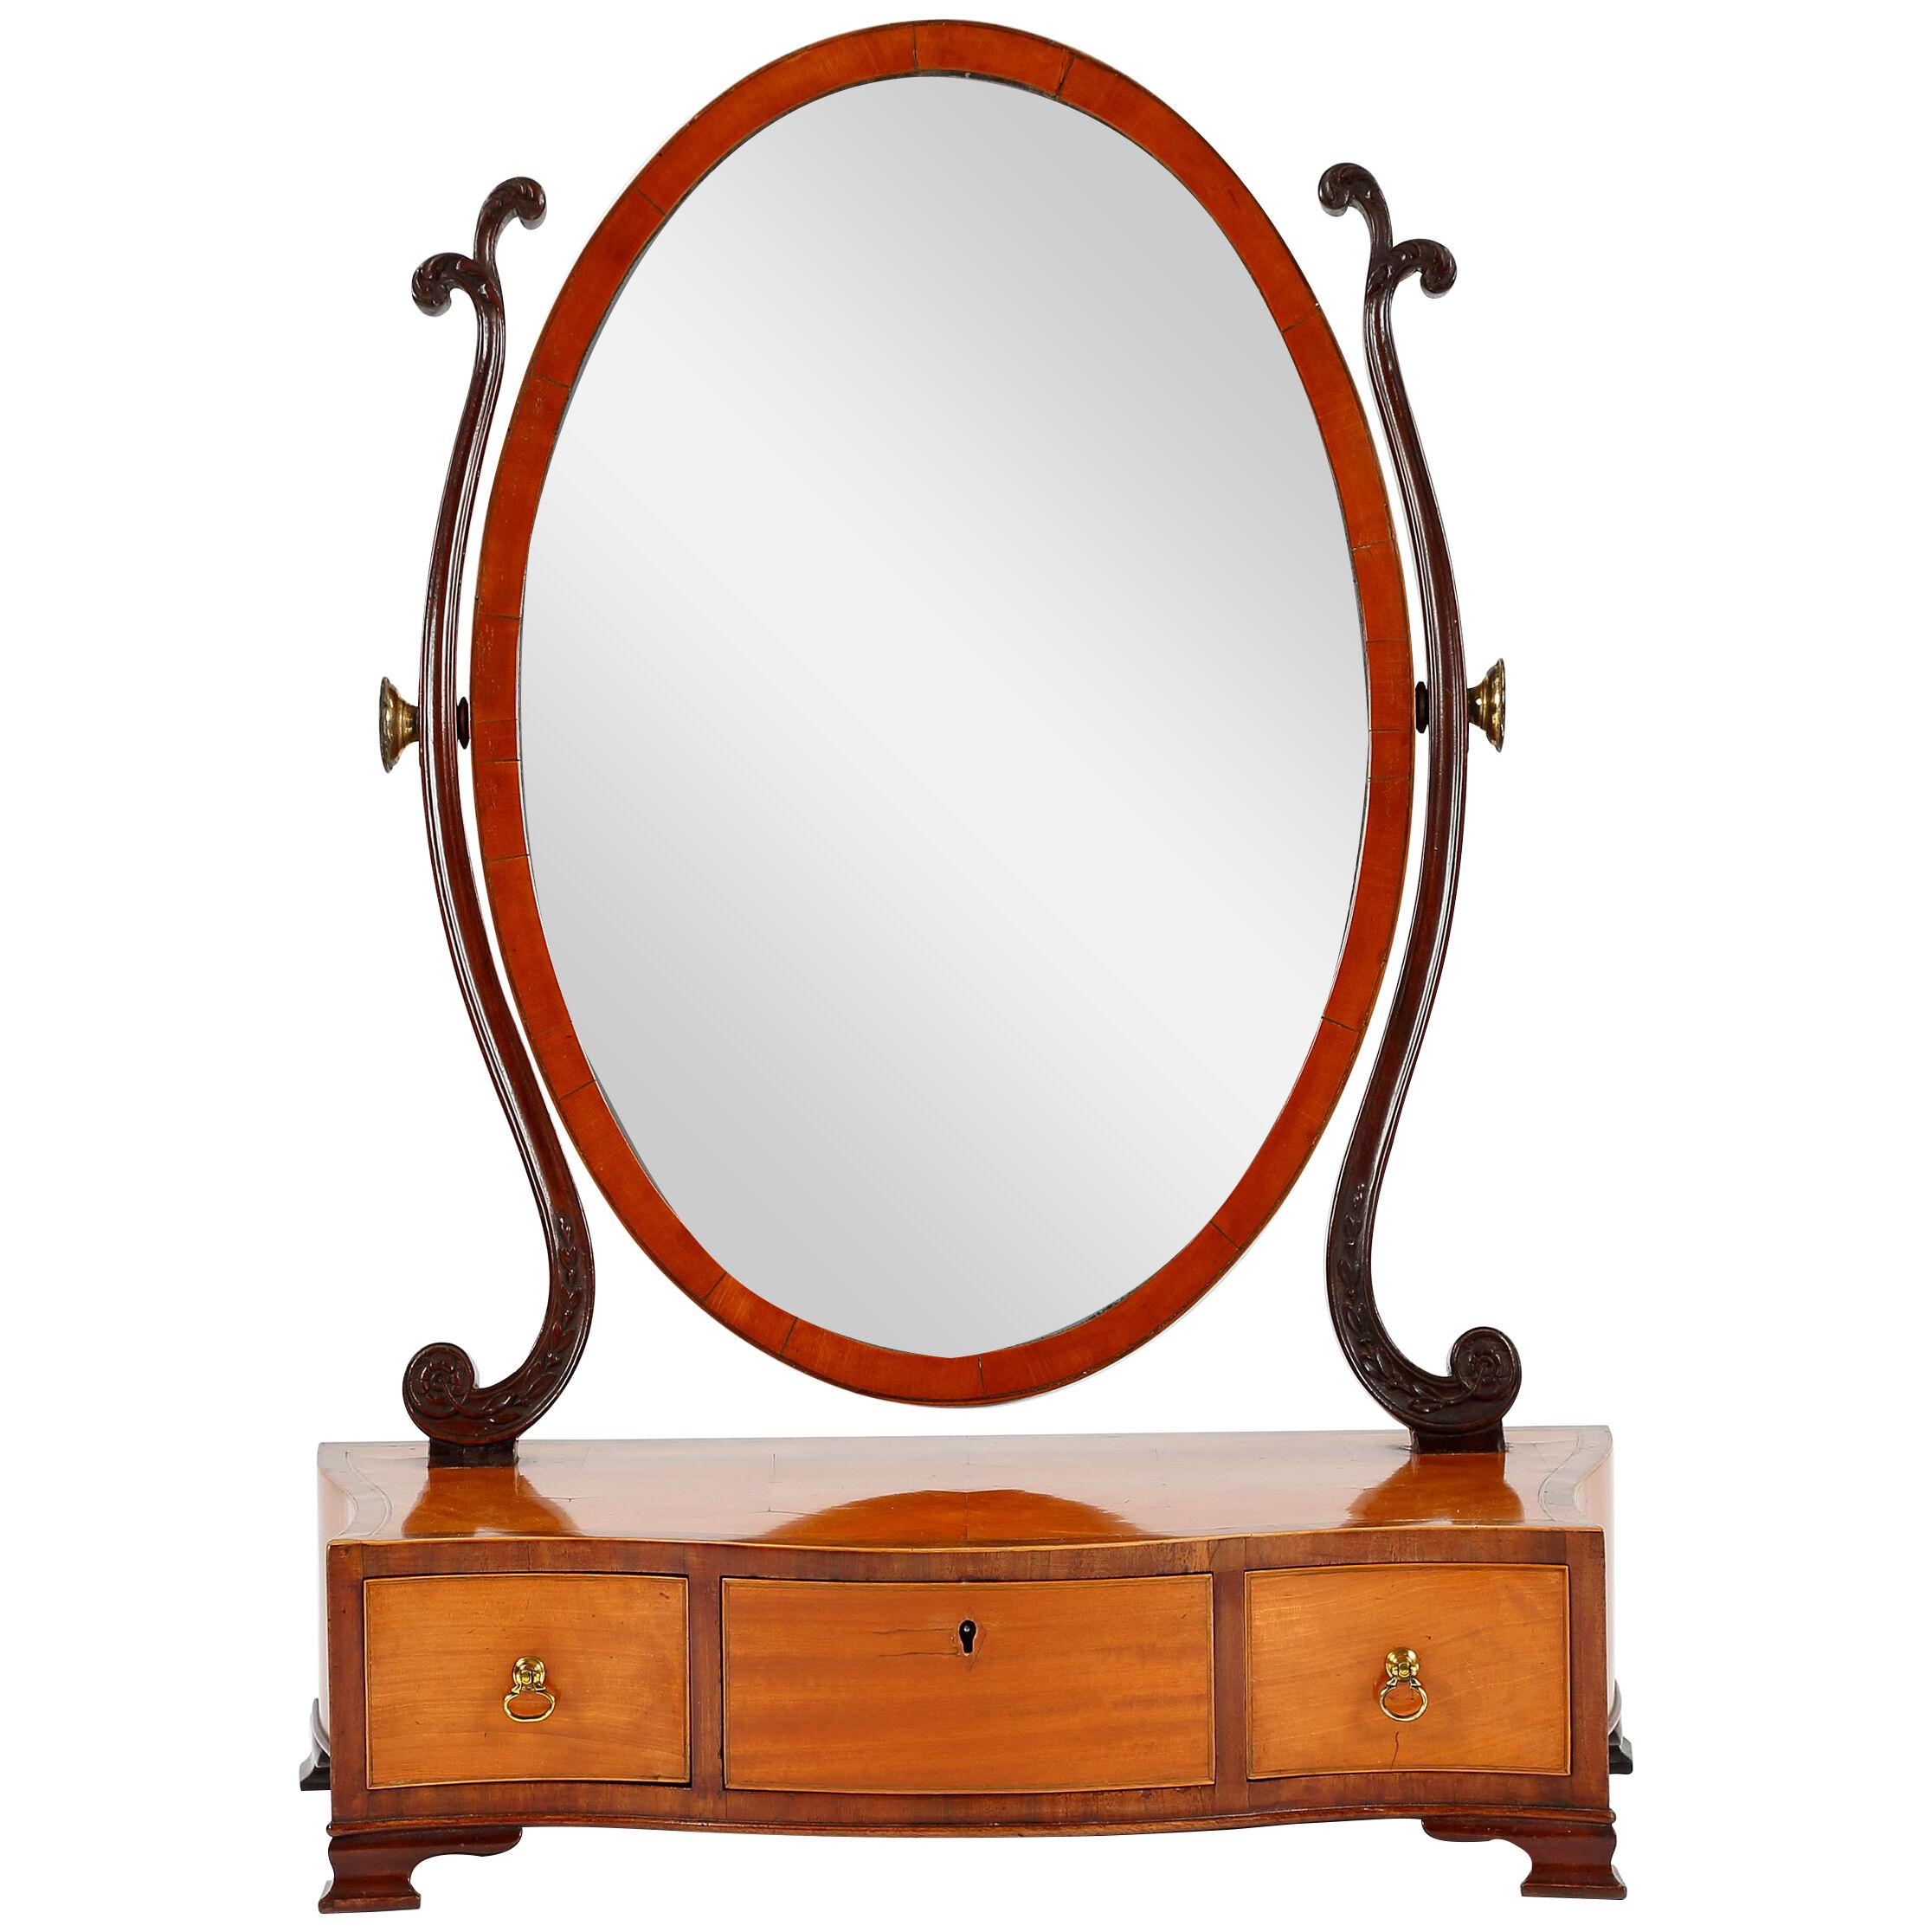 18th century satinwood toilet mirror